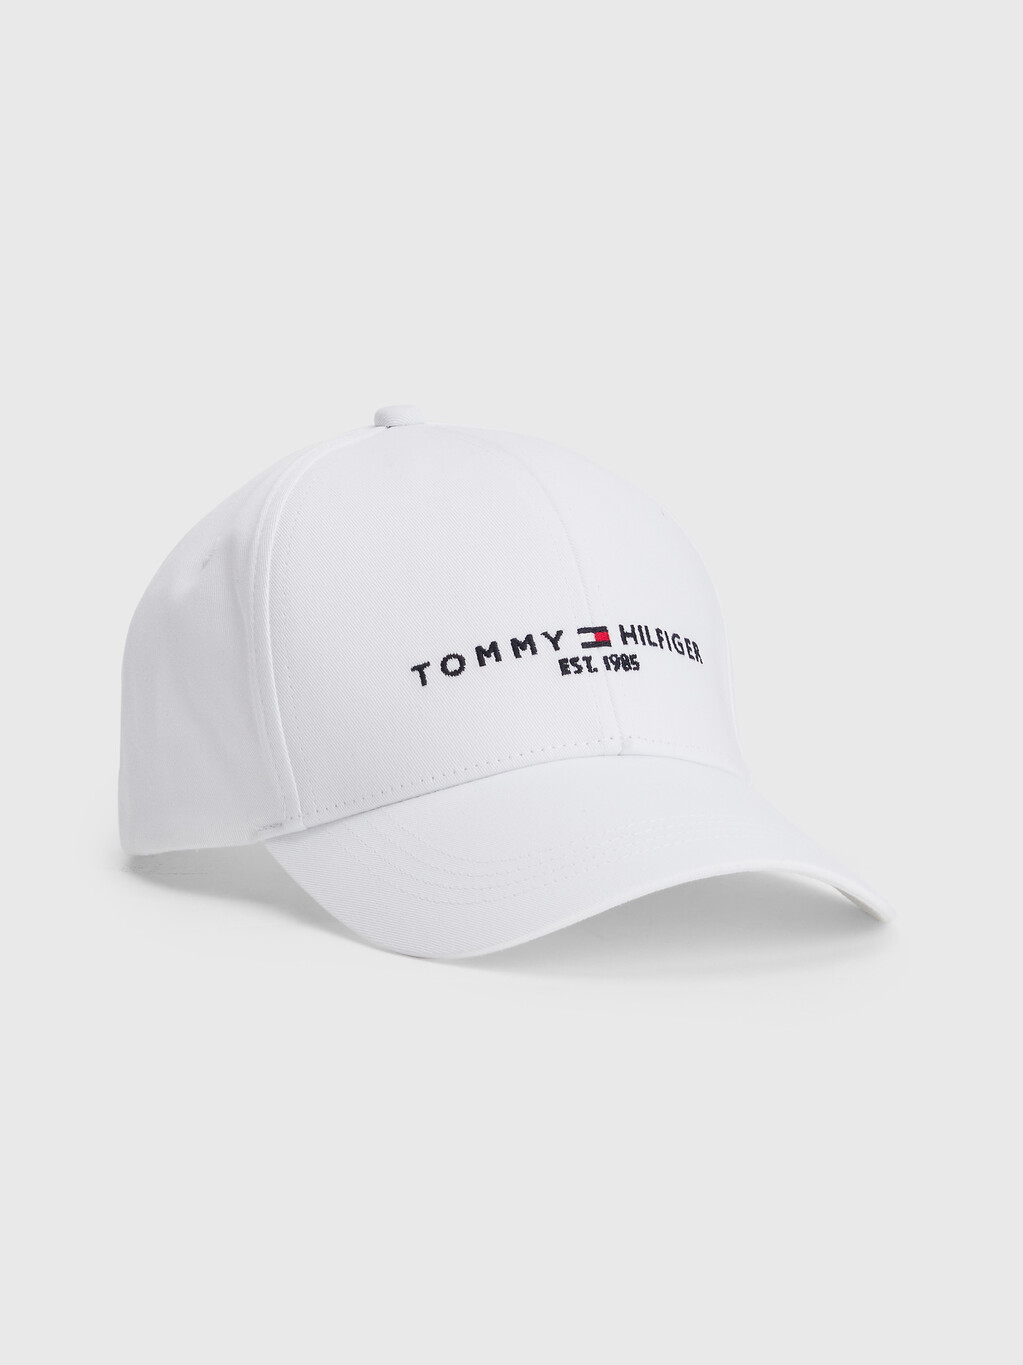 Tommy Hilfiger 經典有機棉棒球帽, White, hi-res